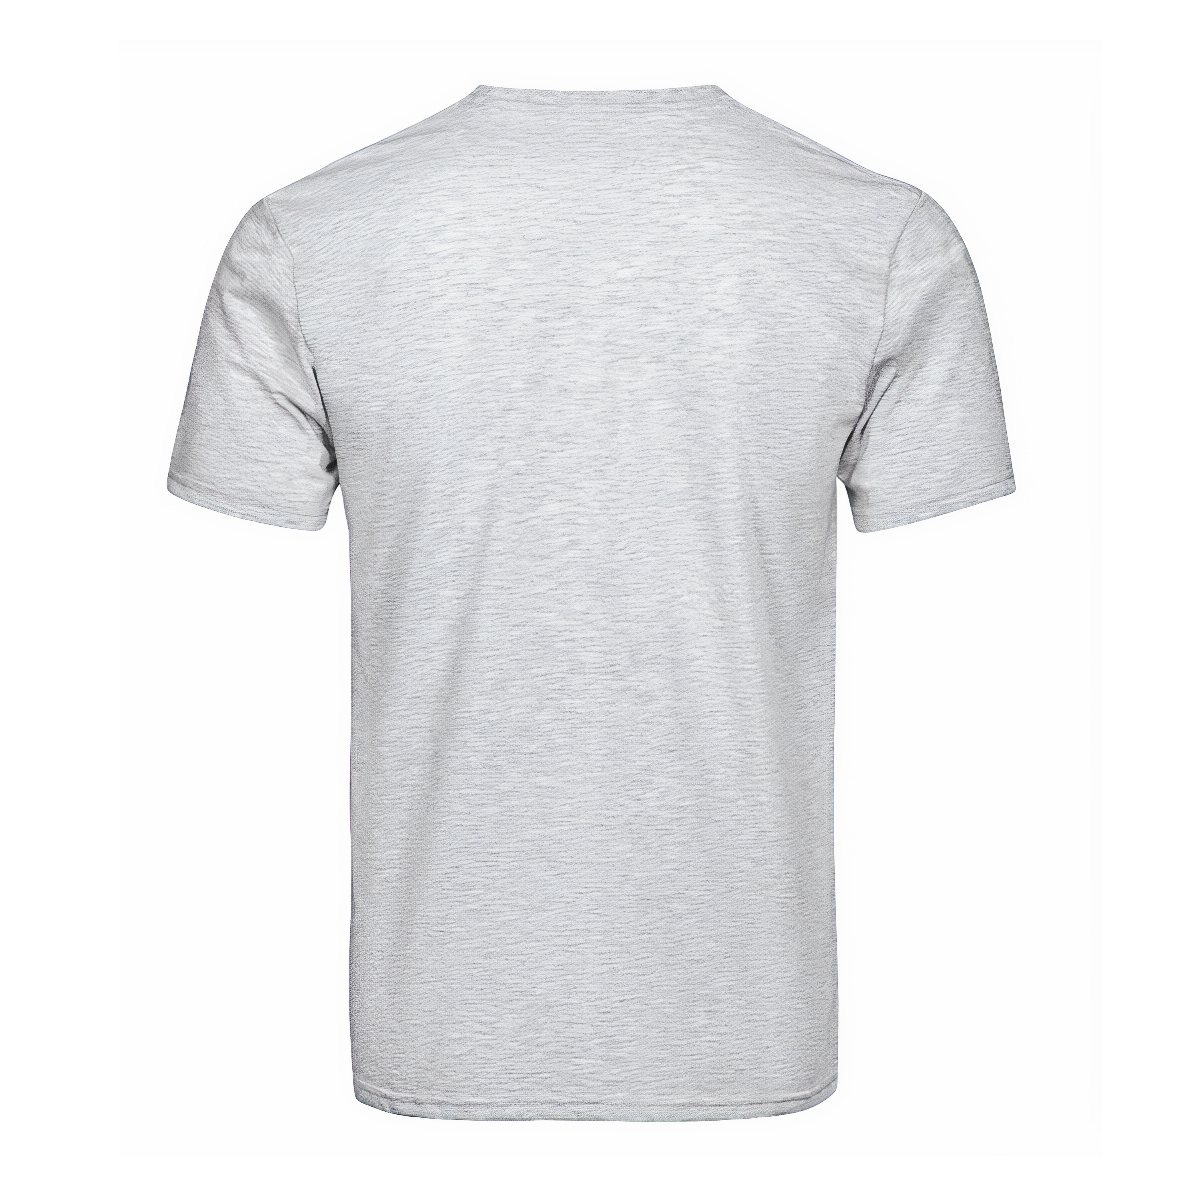 Rait Tartan Crest T-shirt - I'm not yelling style